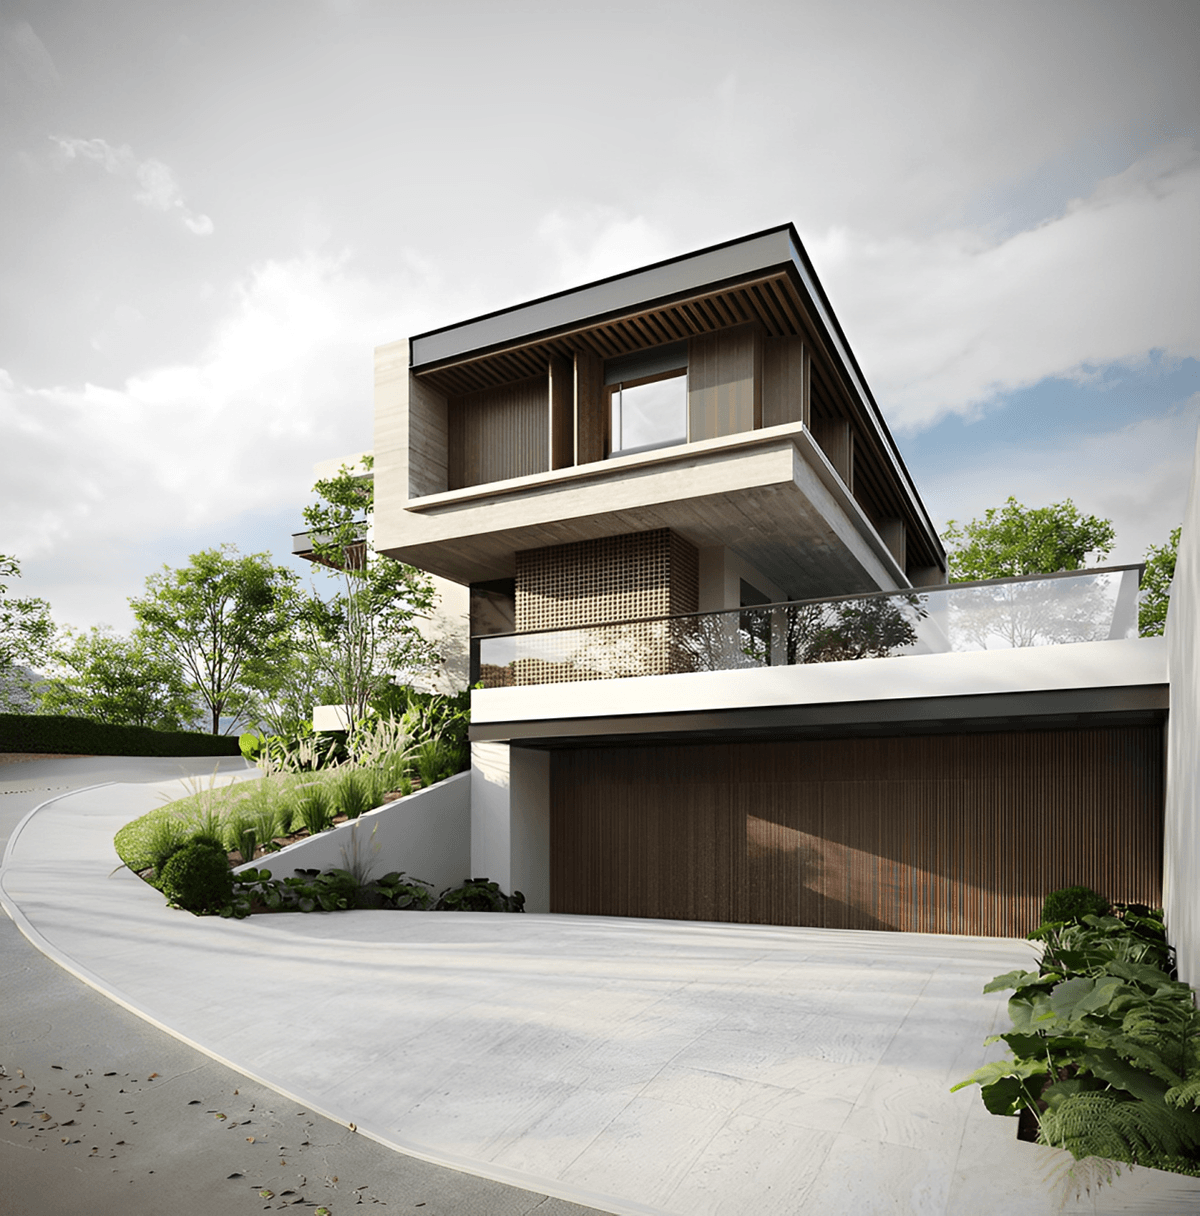 Exterior rendering exterior design architecture Render visualization 3ds max modern 3D exterior vray